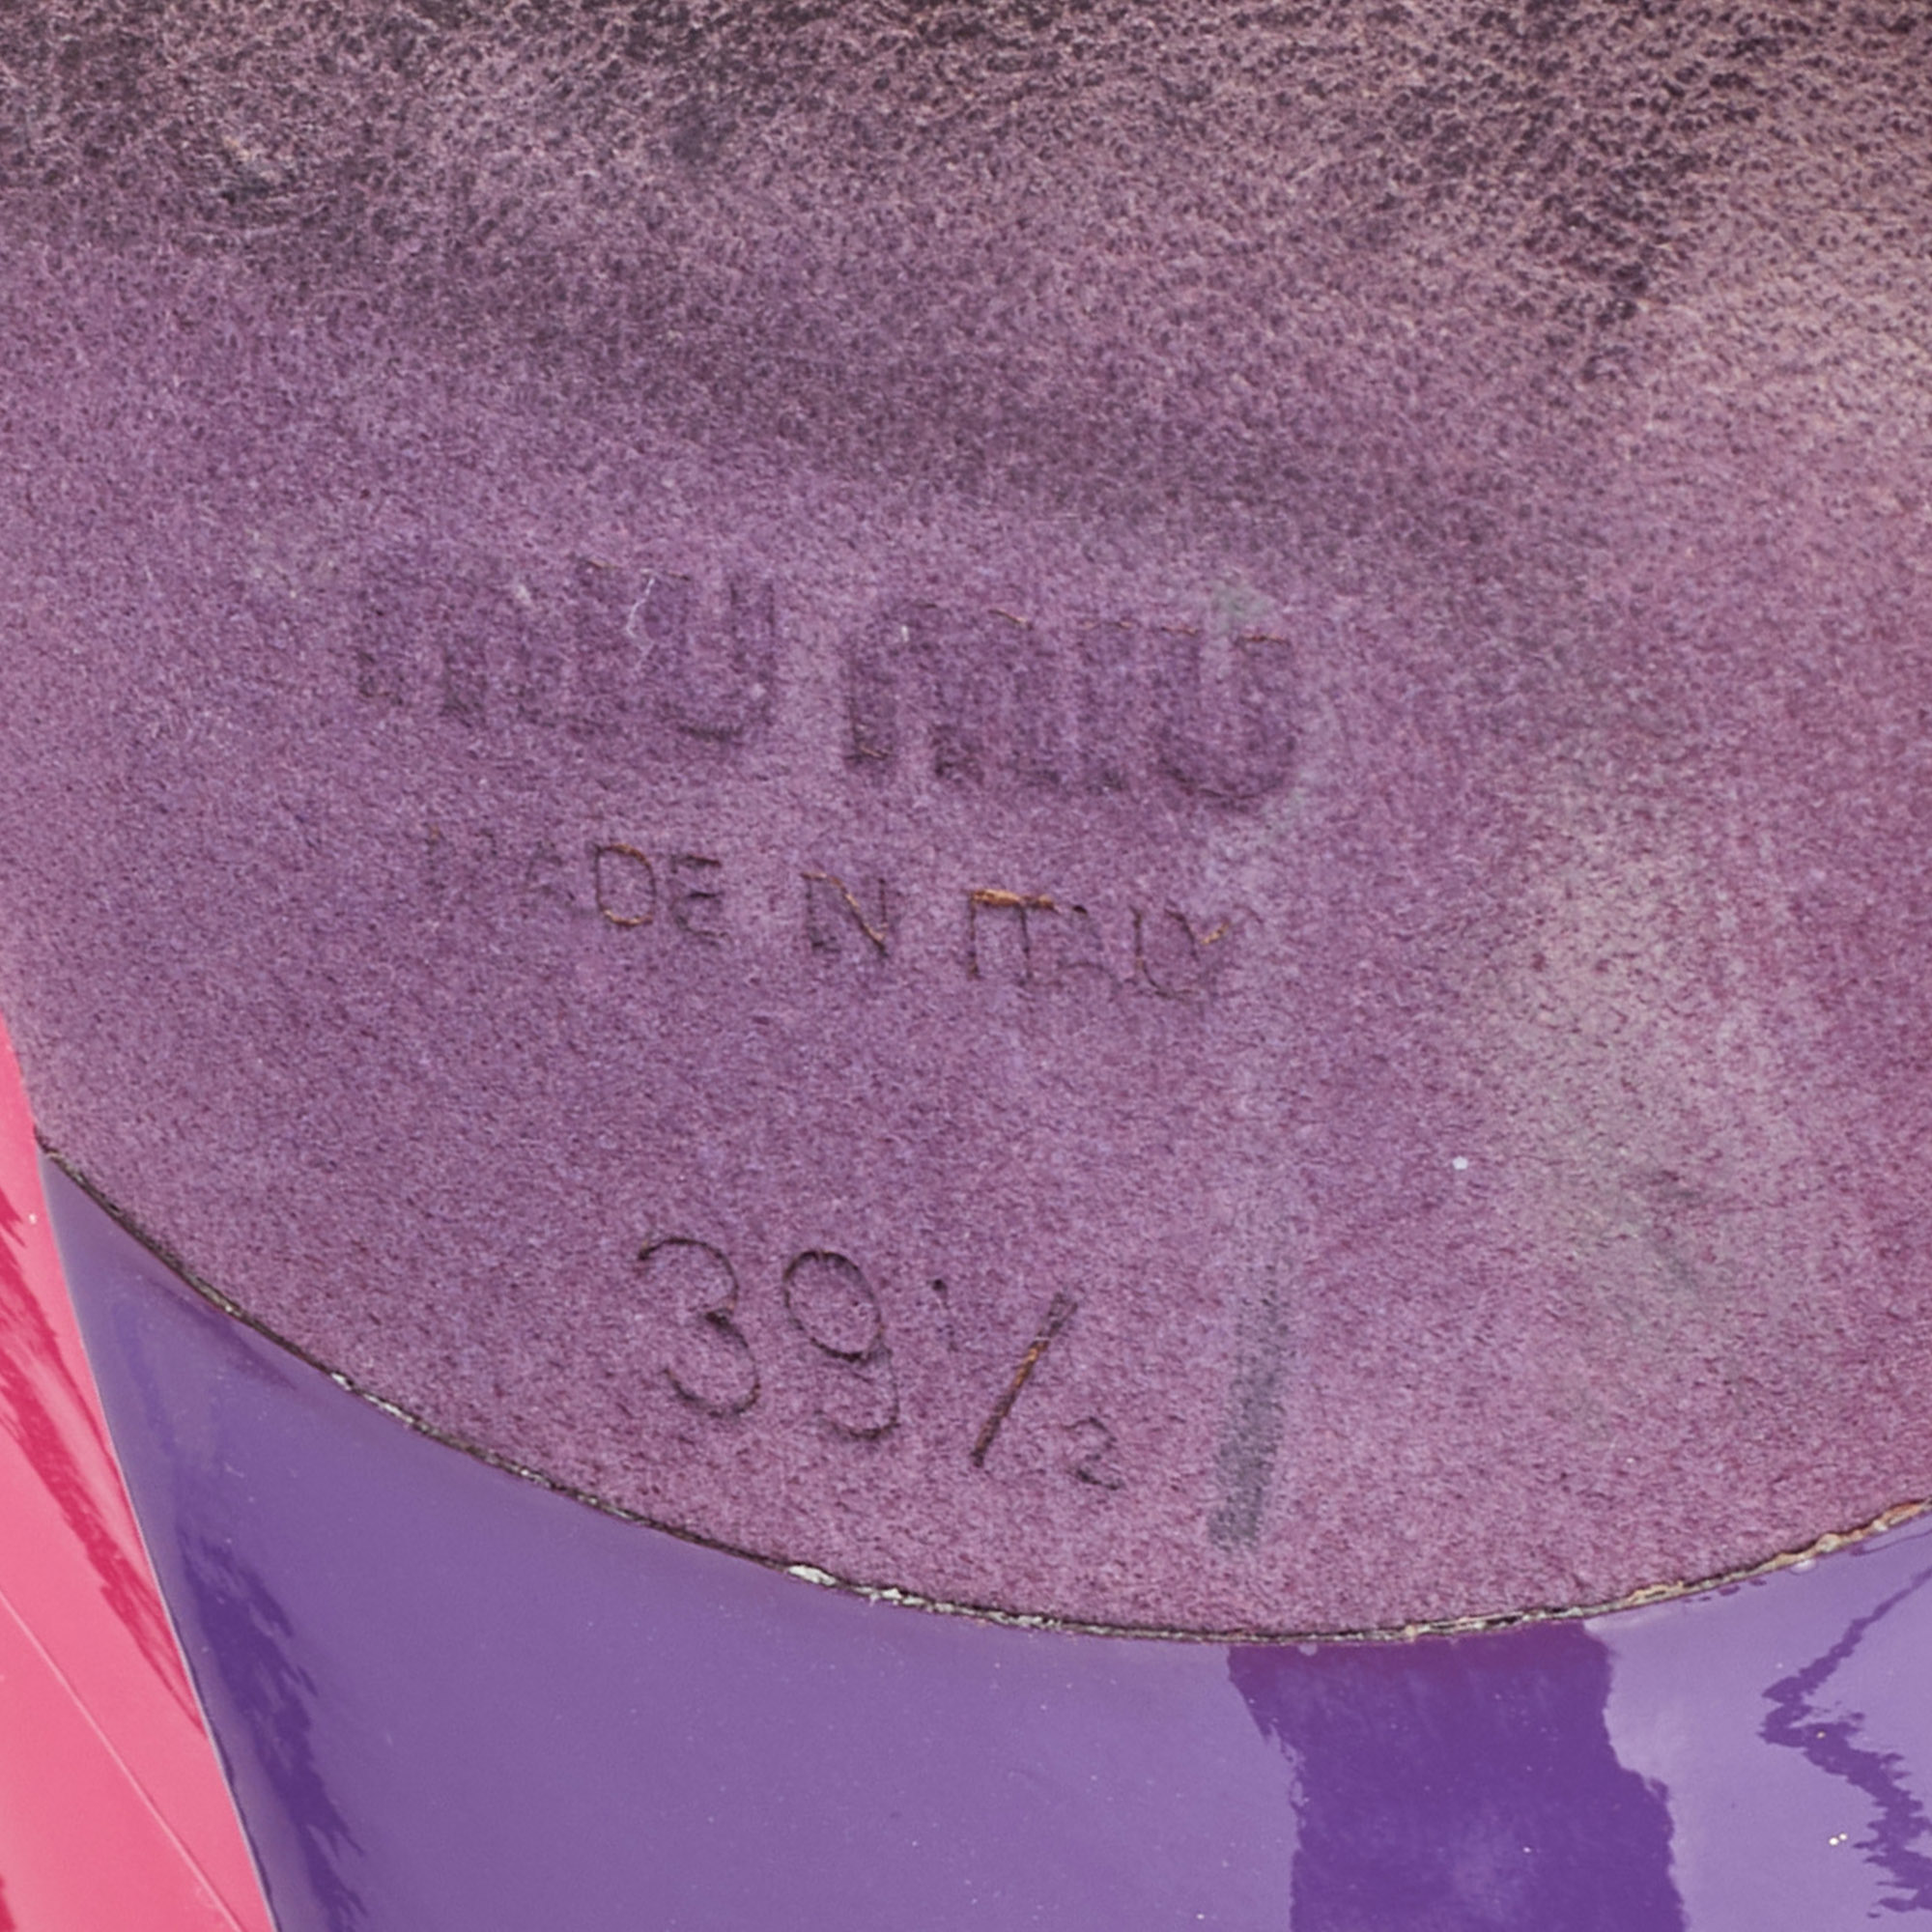 Miu Miu Pink Patent Leather Peep Toe Platform Pumps Size 39.5